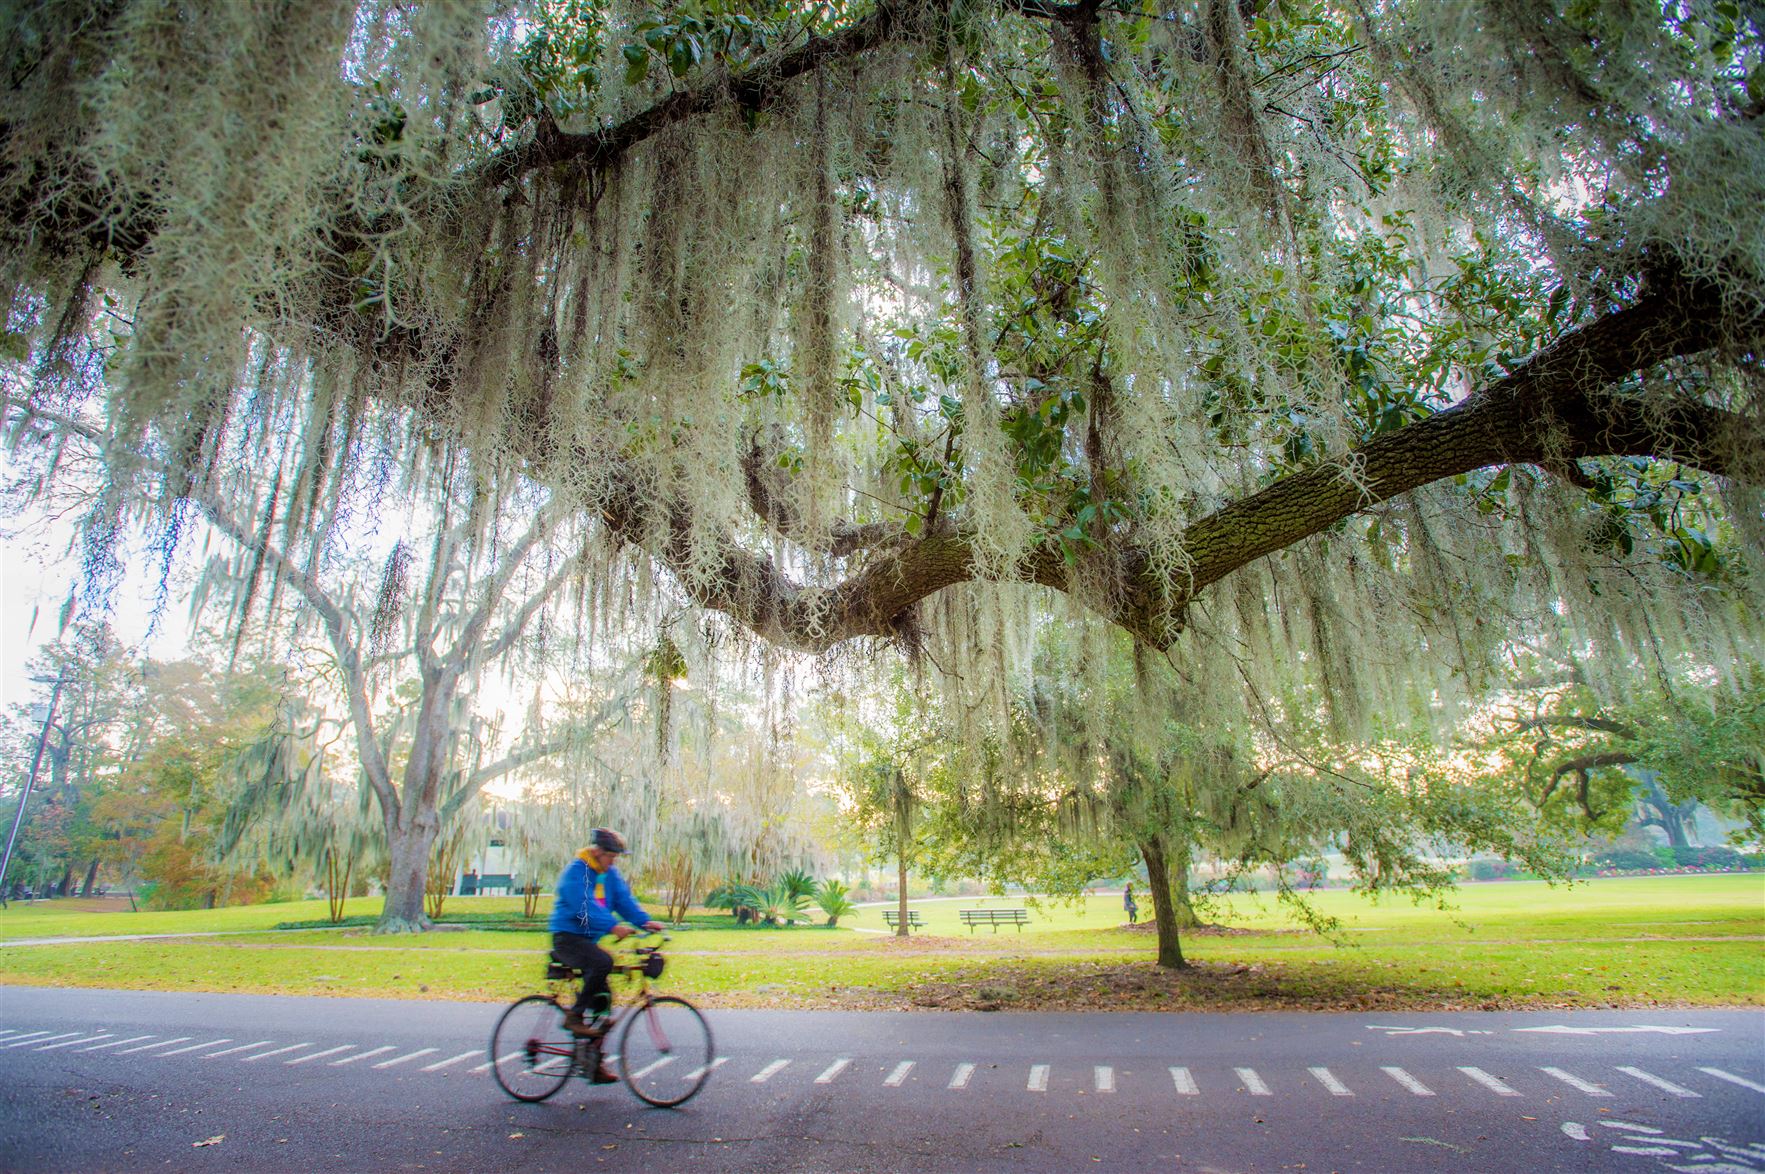 New Orleans' Audubon Park - A bike rider